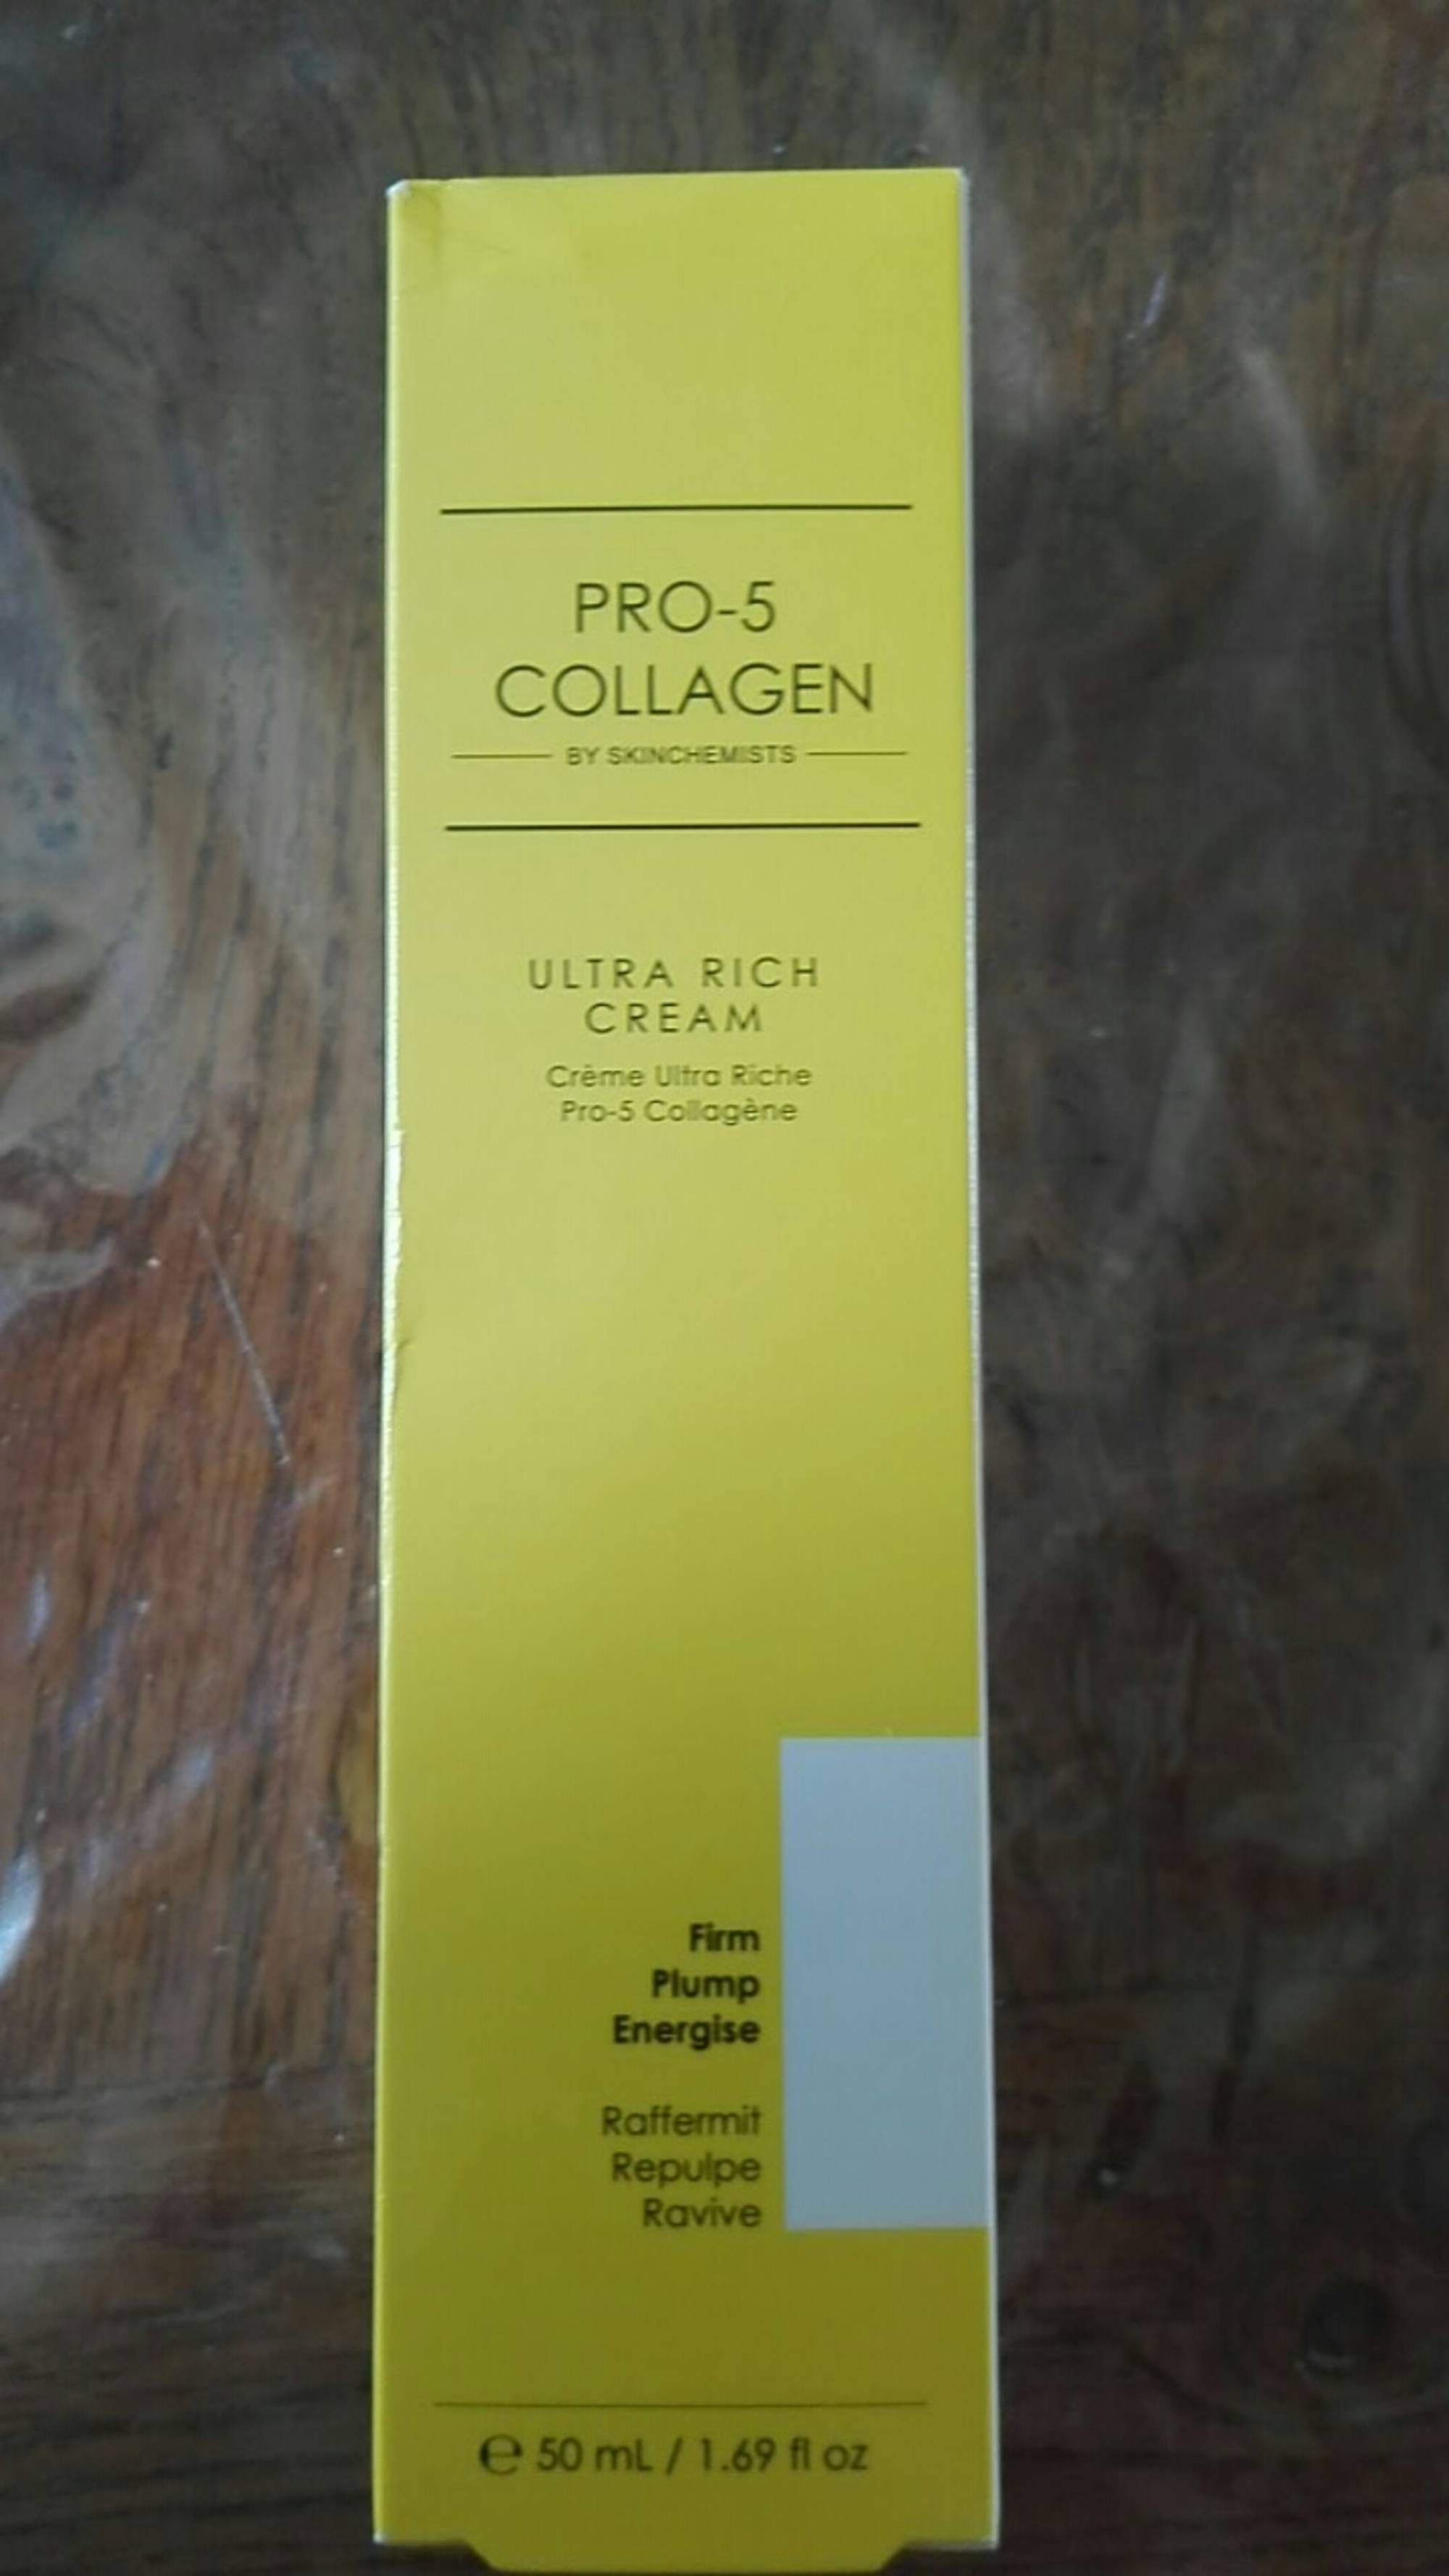 SKIN CHEMISTS - Pro-5 Collagen - Crème ultra riche